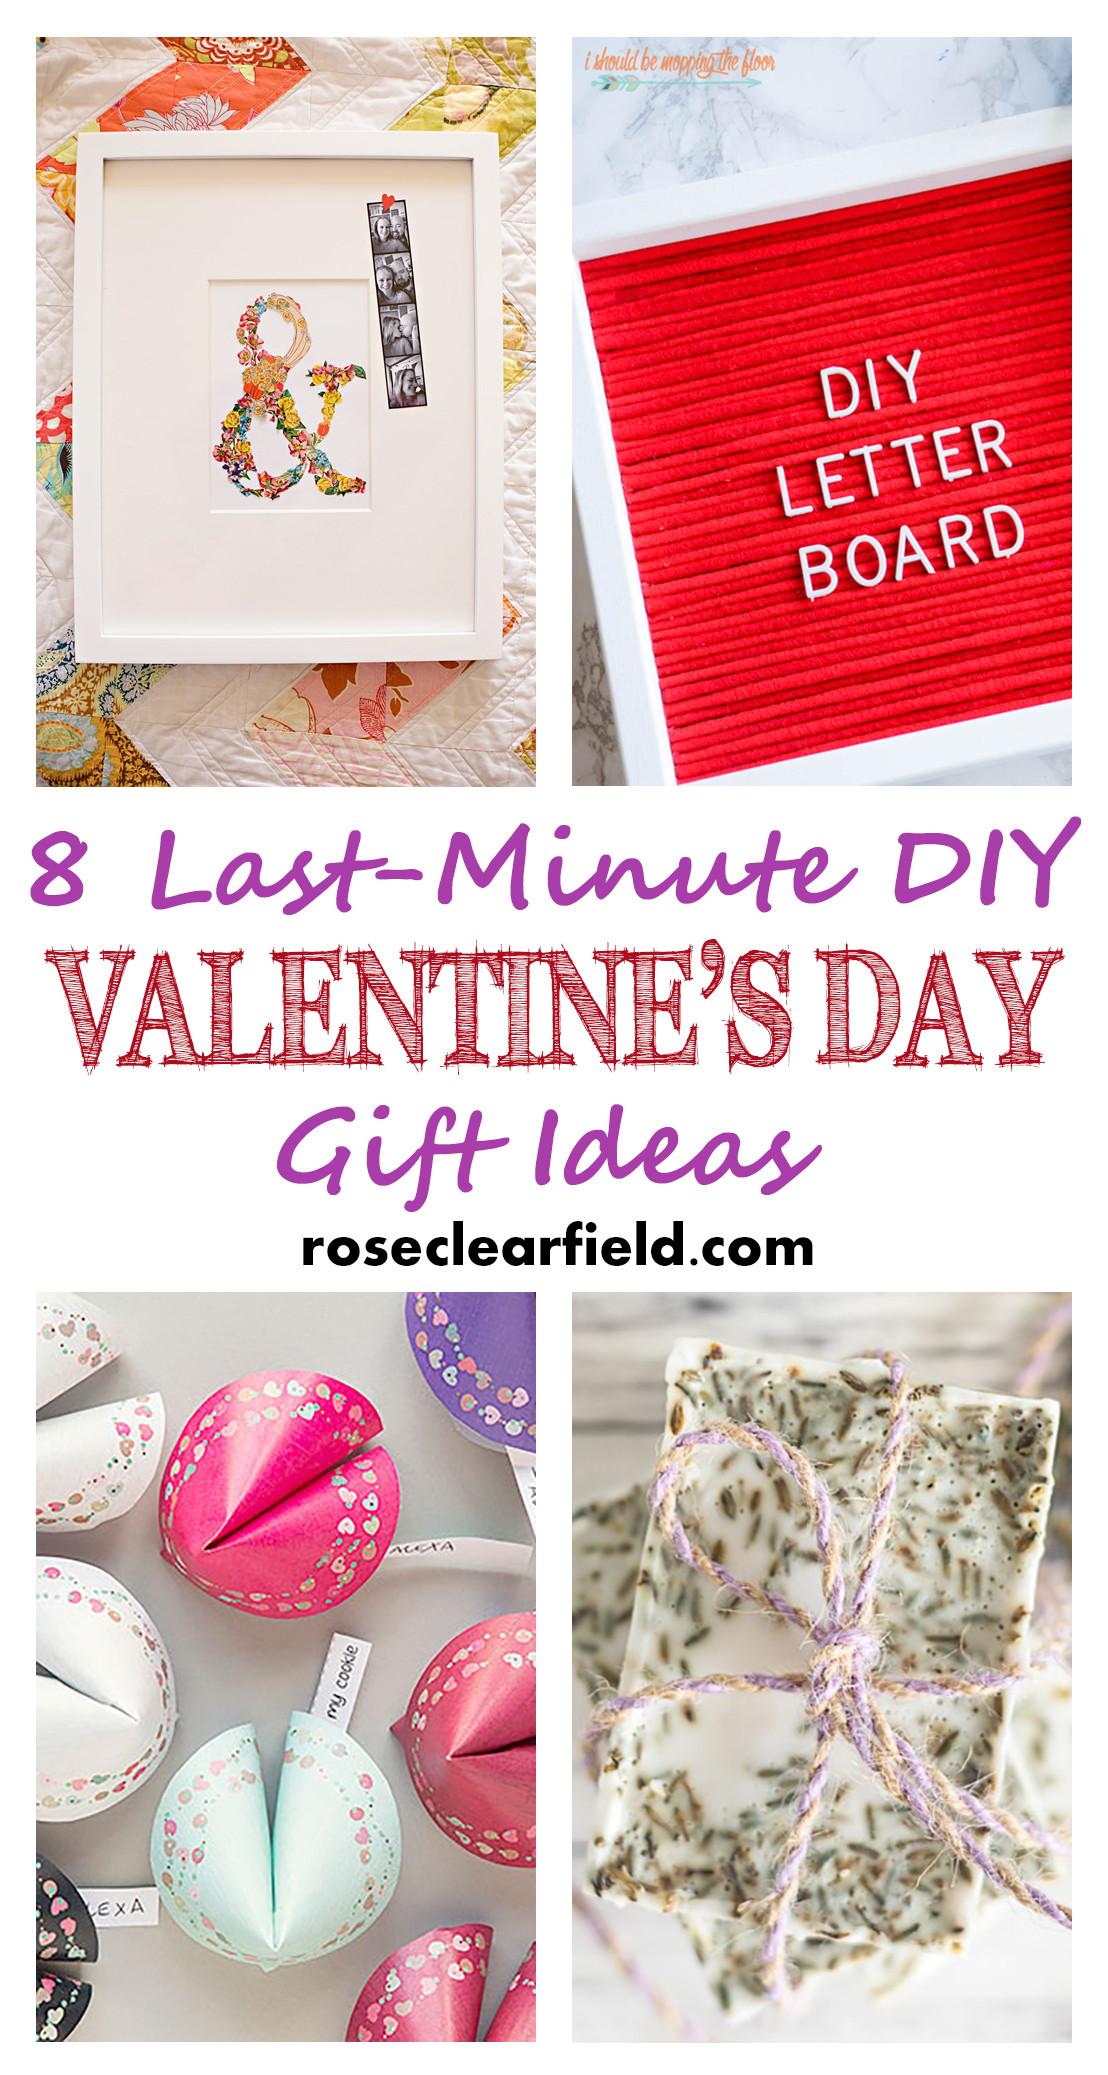 Valentine'S Day Gift Ideas
 Last Minute DIY Valentine s Day Gift Ideas • Rose Clearfield